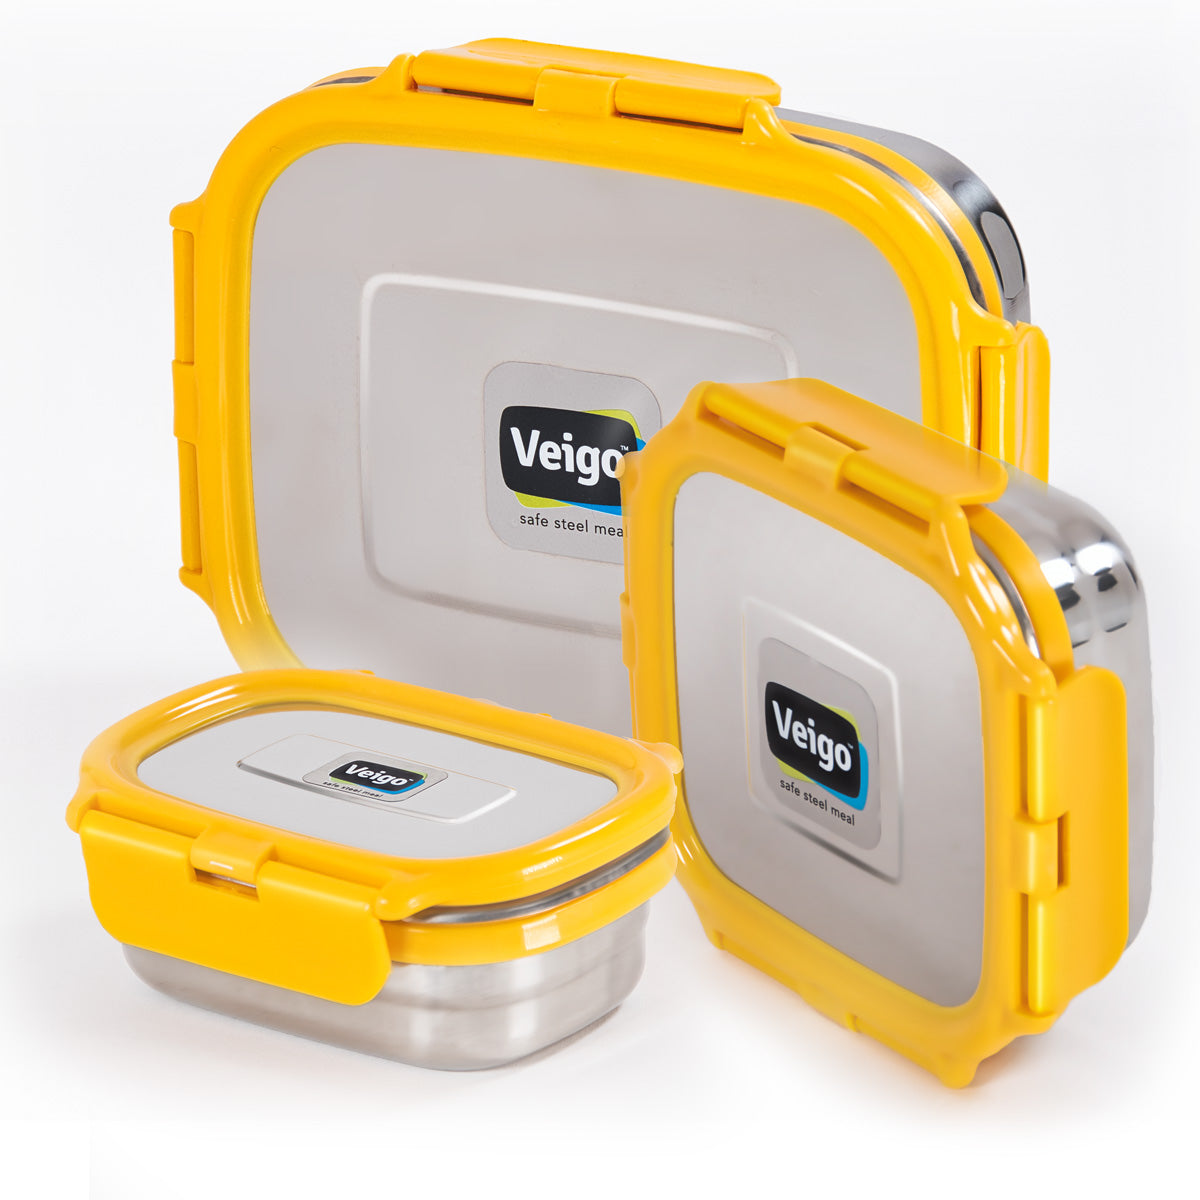 Veigo Celebration Ready-to-Gift Pack - veigolunchboxes